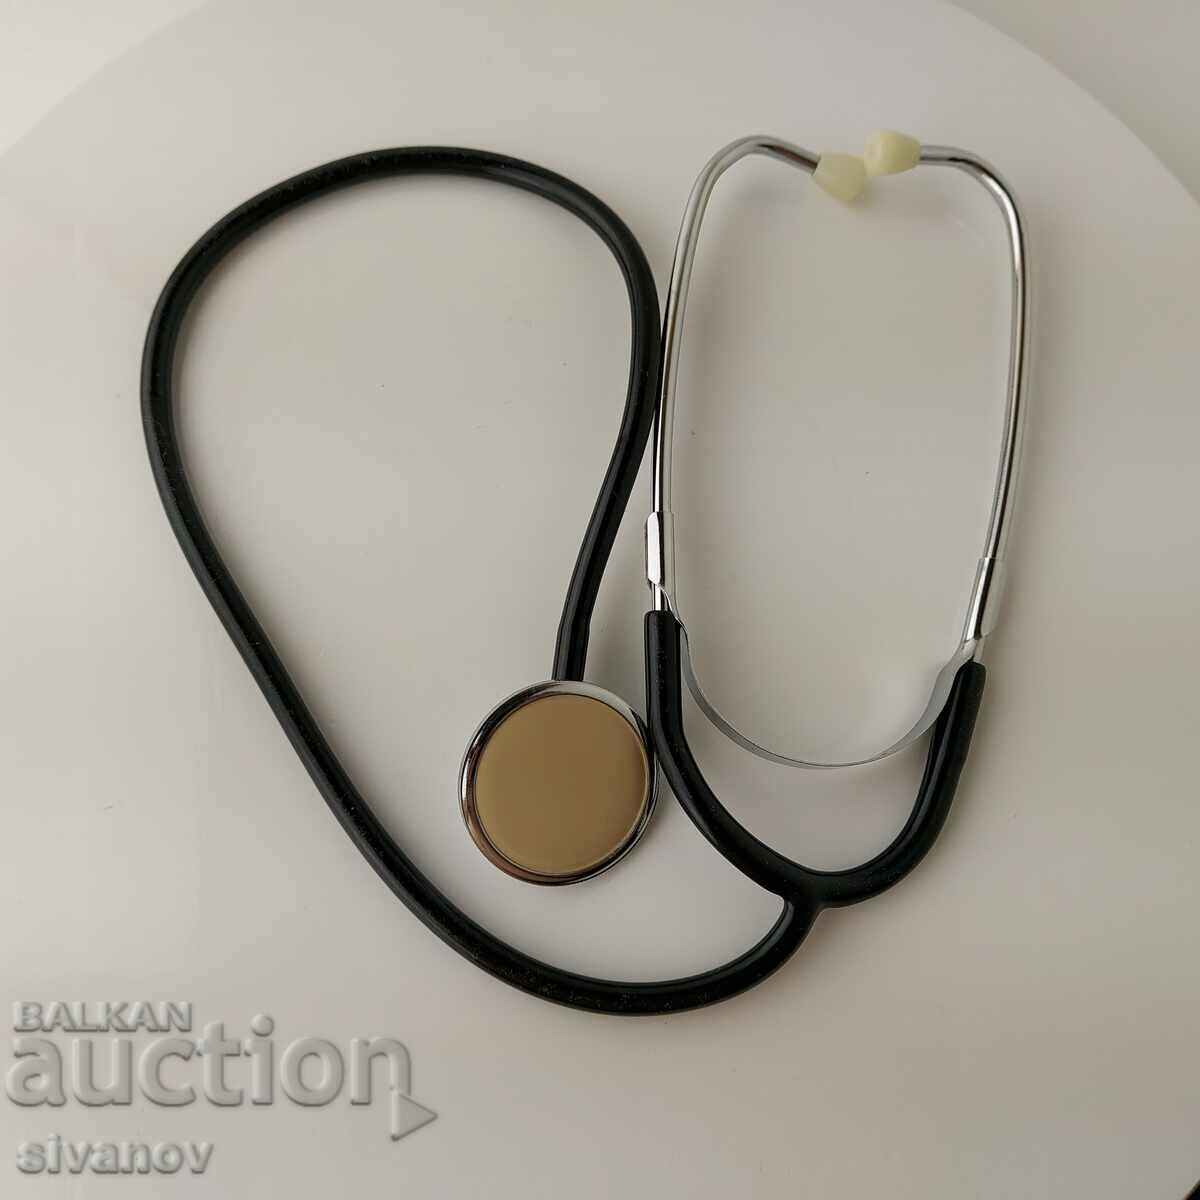 Old stethoscope doctor doctor headphones Japan #5609